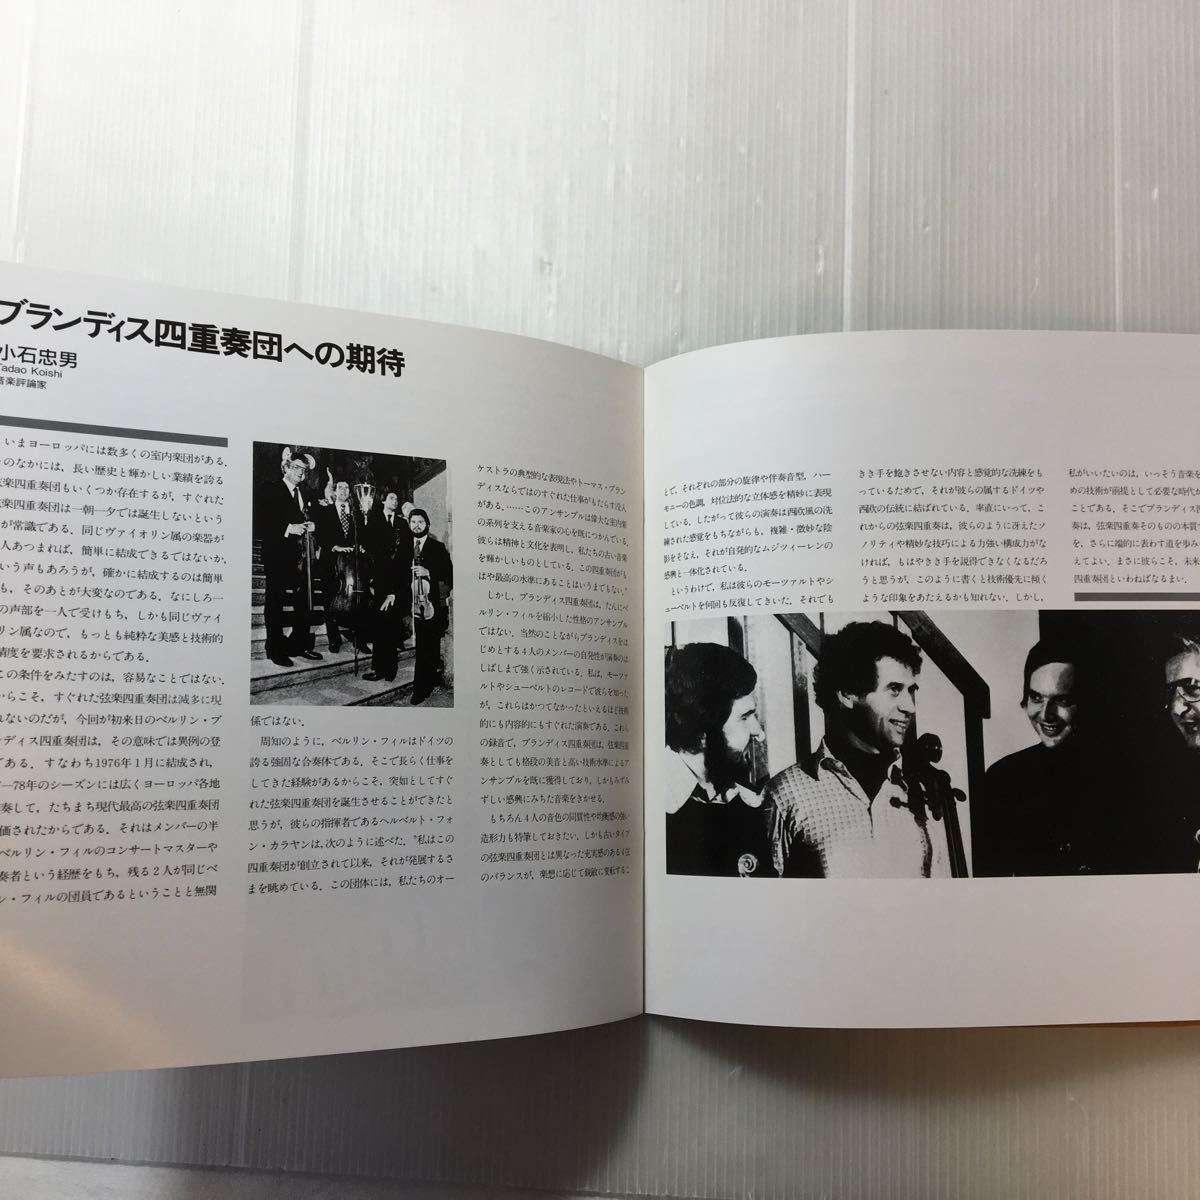 zaa-m1aa♪【公演プログラム】ベルリン・ブランディス弦楽四重奏1987年日本公演